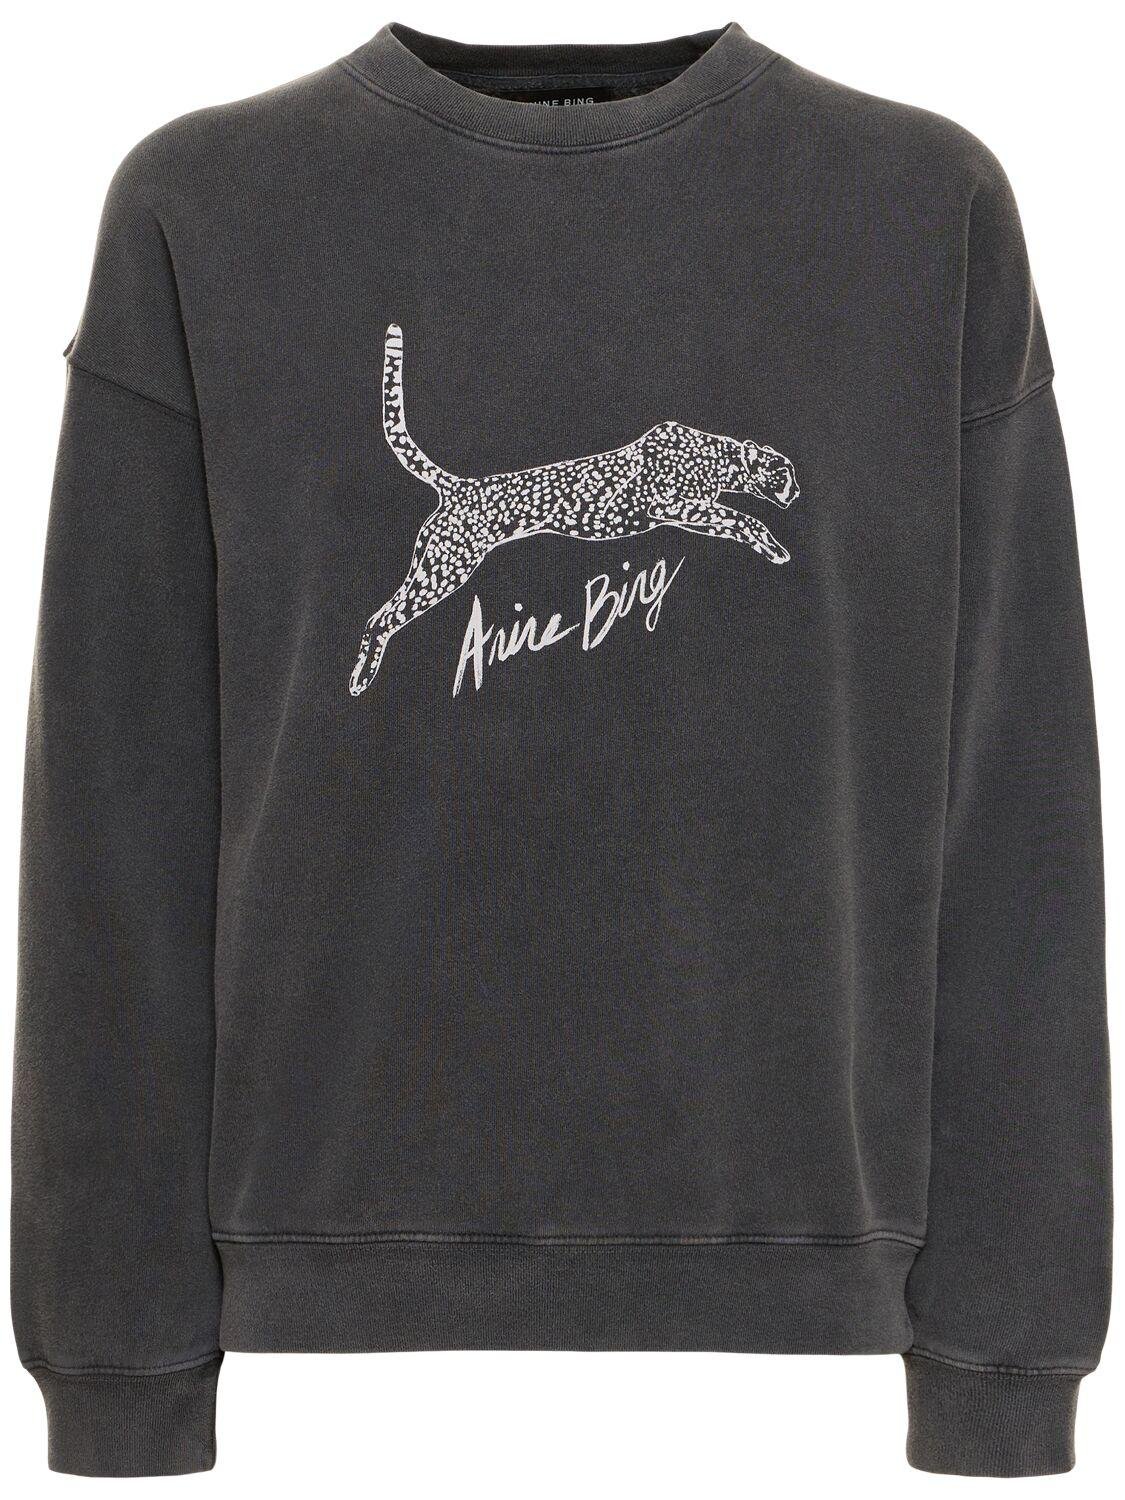 Spencer Spotted Leopard Sweatshirt by ANINE BING